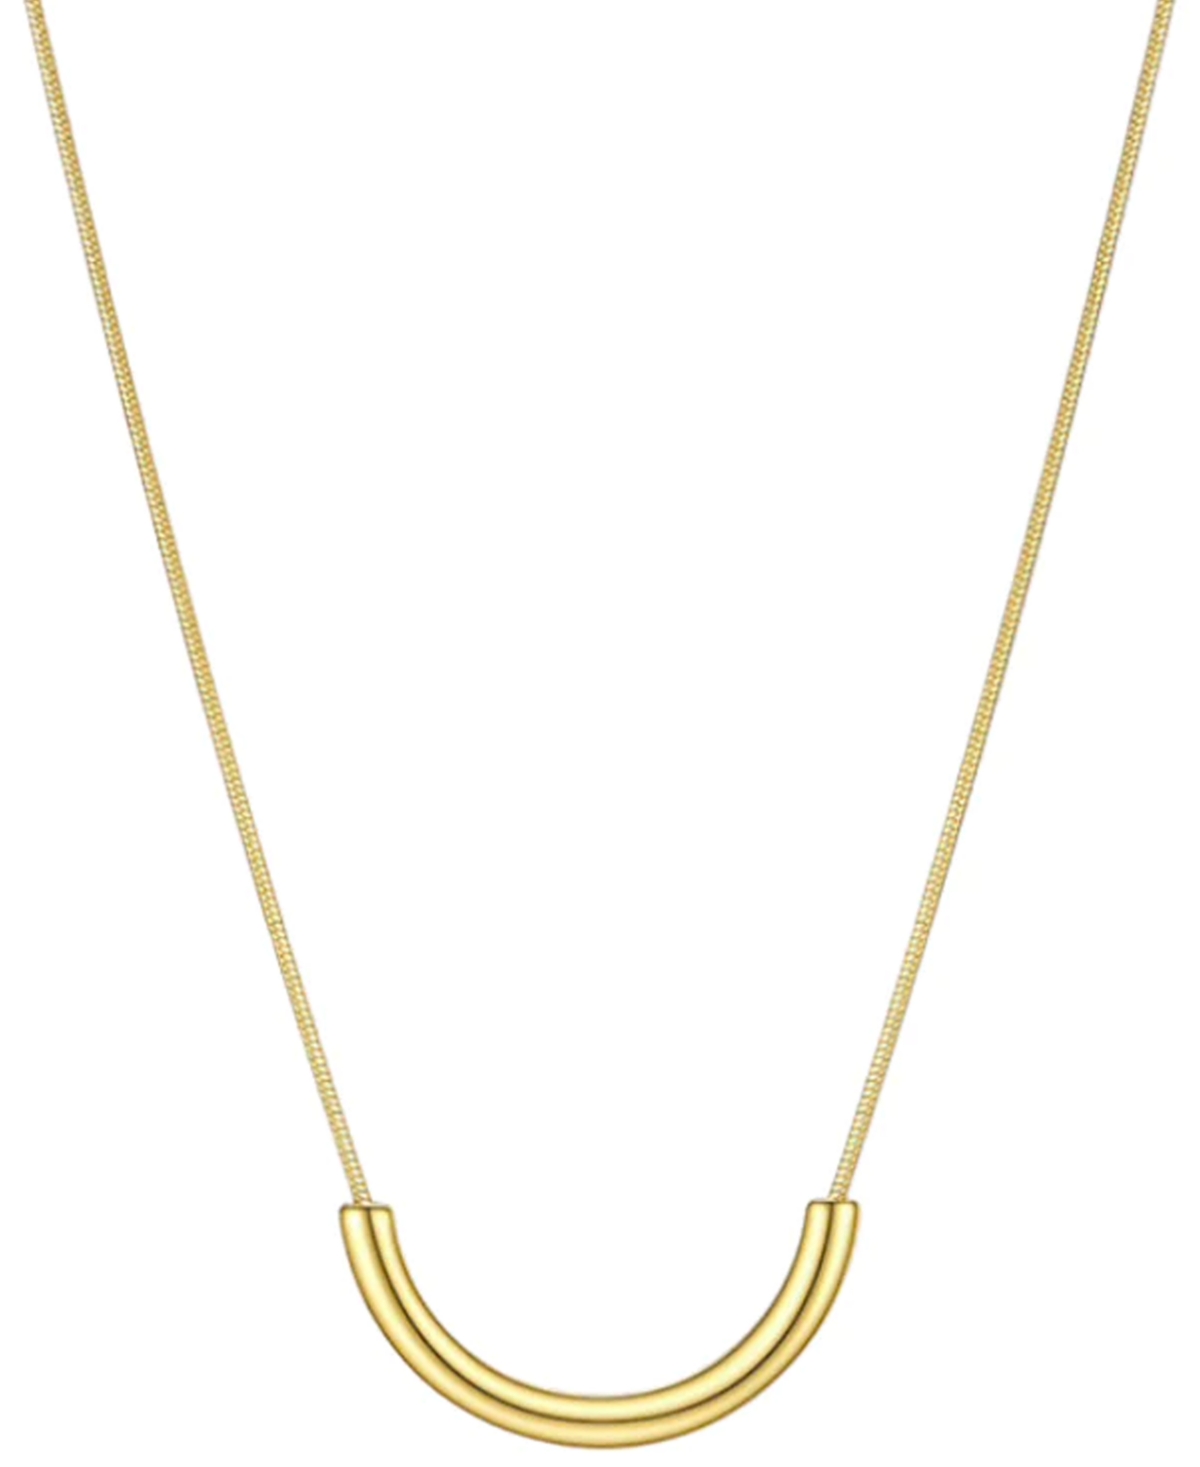 Women's Golden Smile Necklace - Gold-Tone